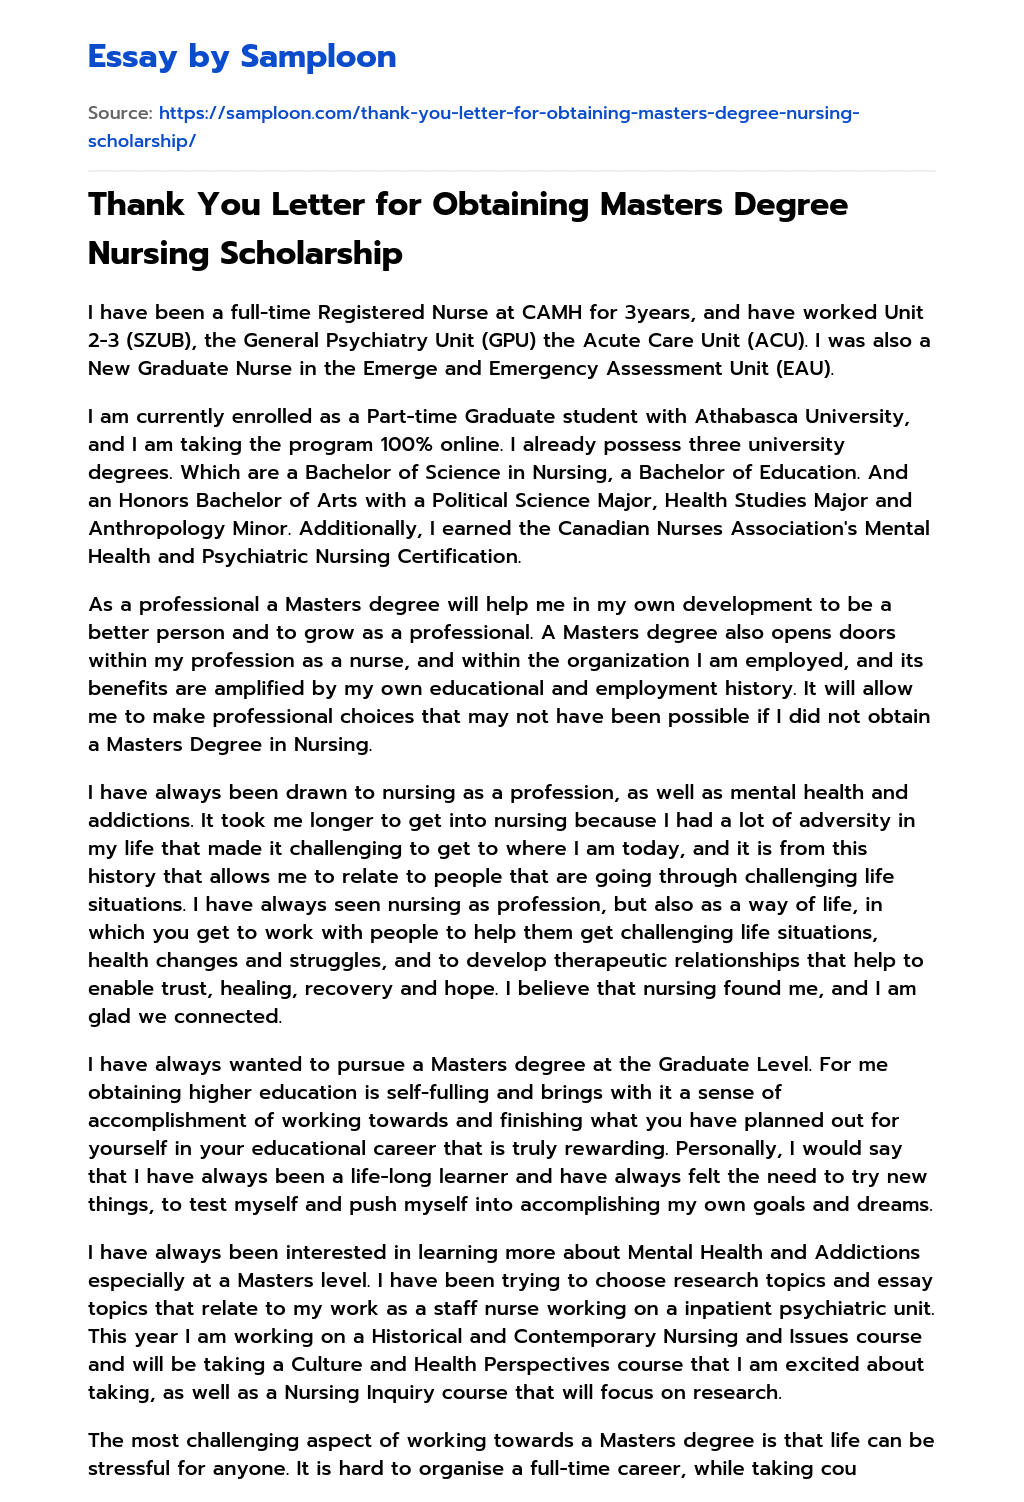 Thank You Letter for Obtaining Masters Degree Nursing Scholarship essay